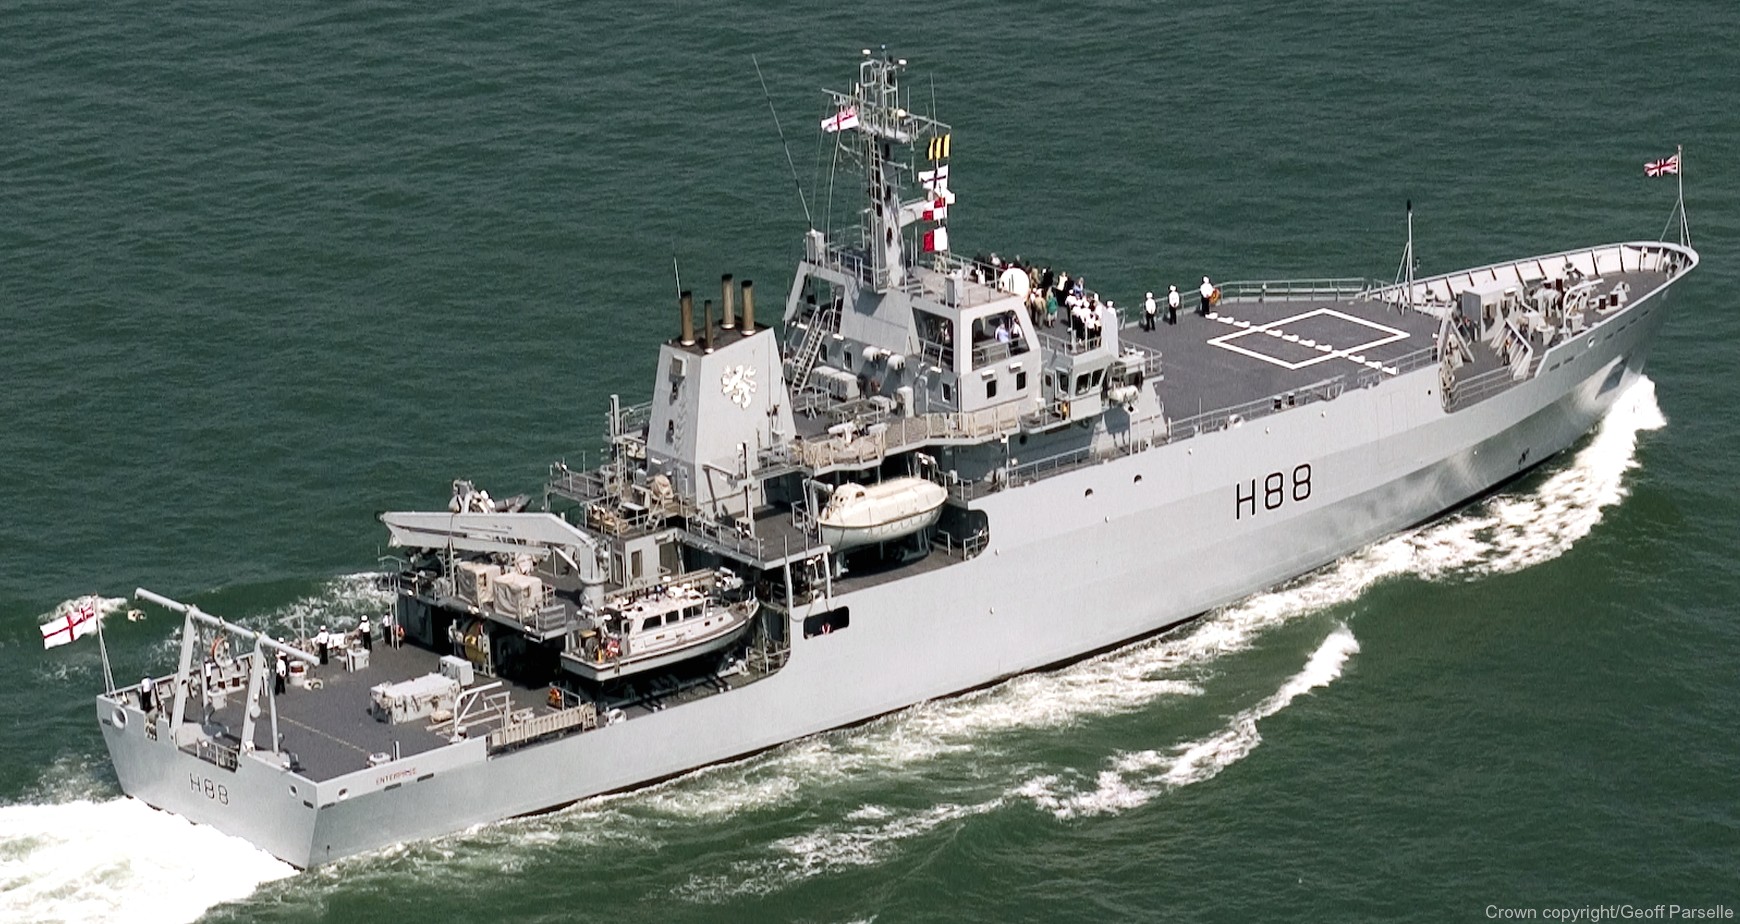 h88 hms enterprise echo class hydrographic and oceanographic survey ship royal navy 02x